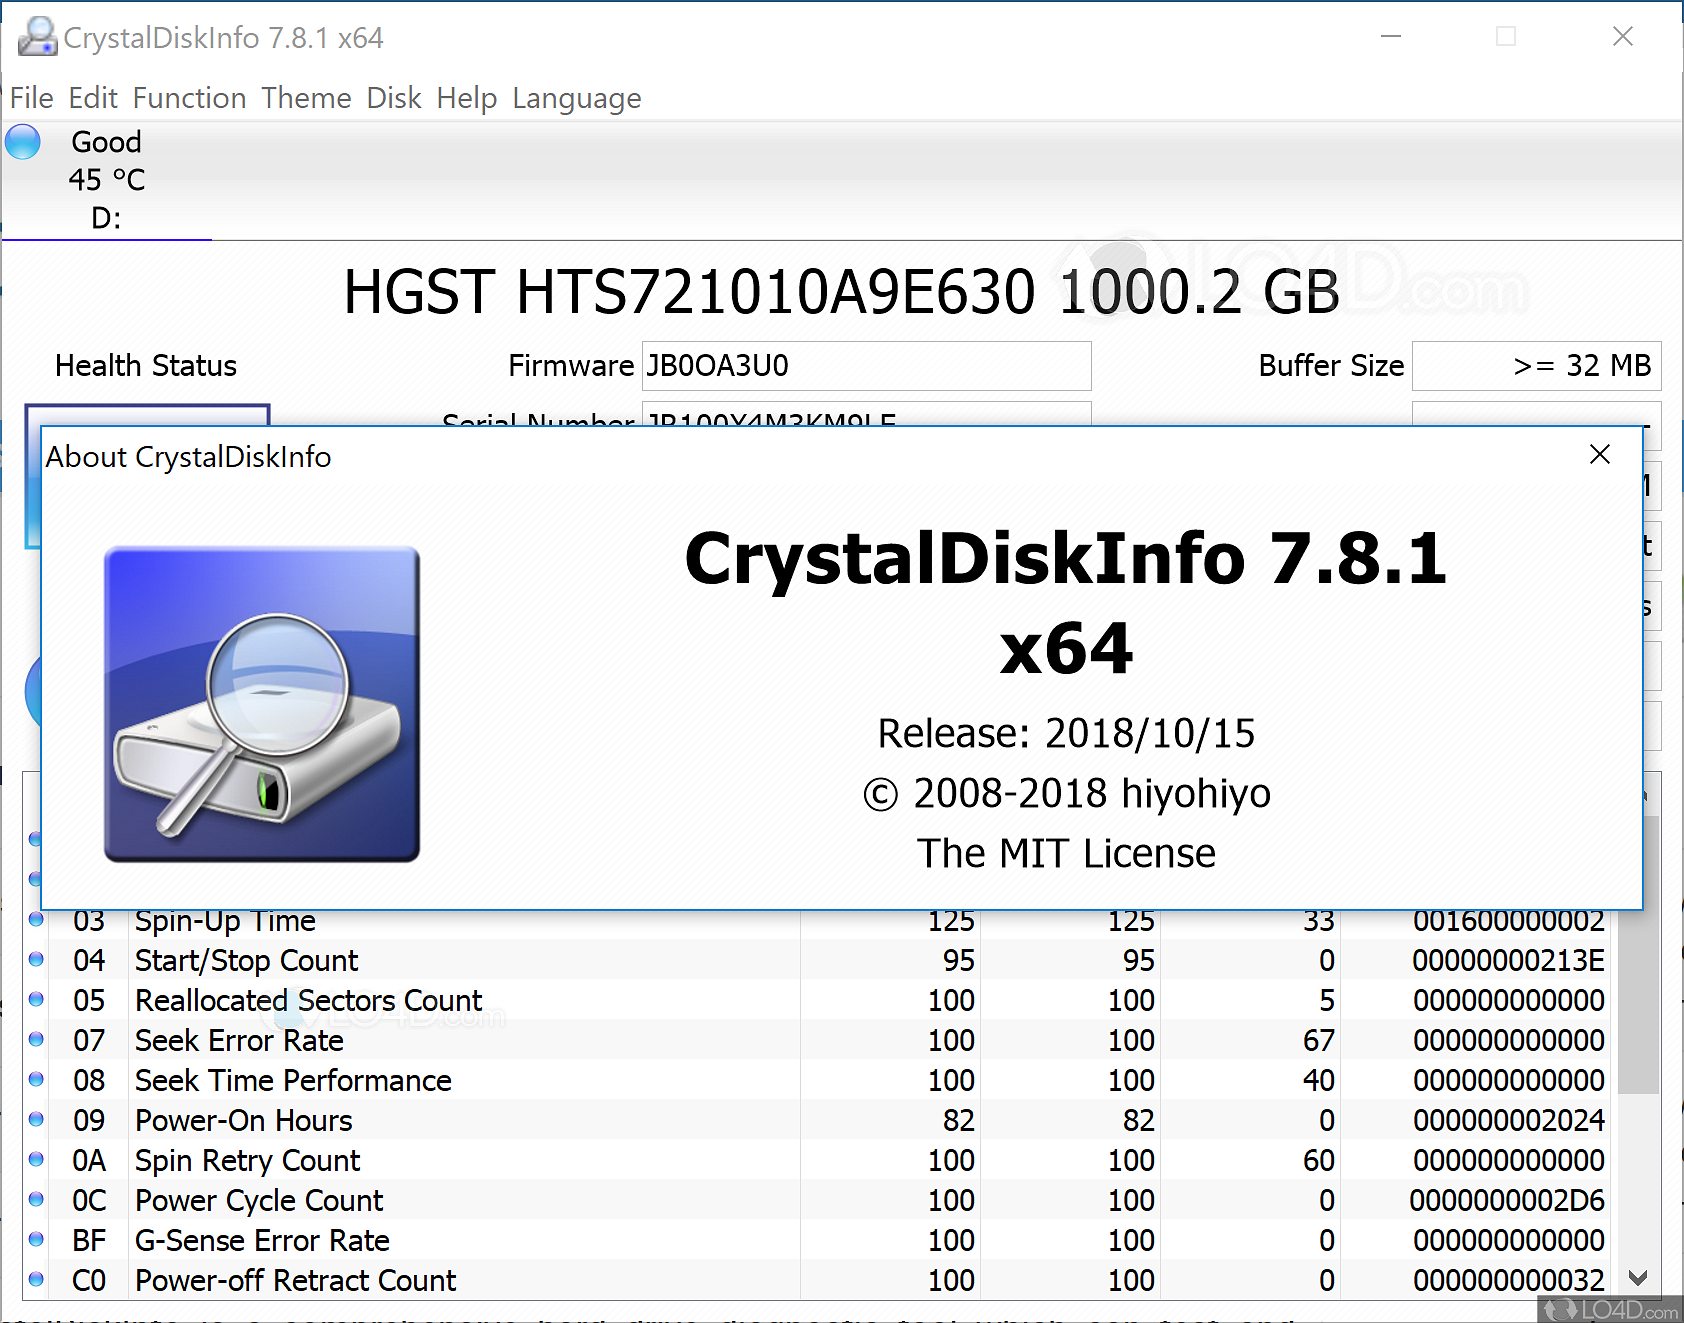 CrystalDiskInfo 9.1.1 download the new version